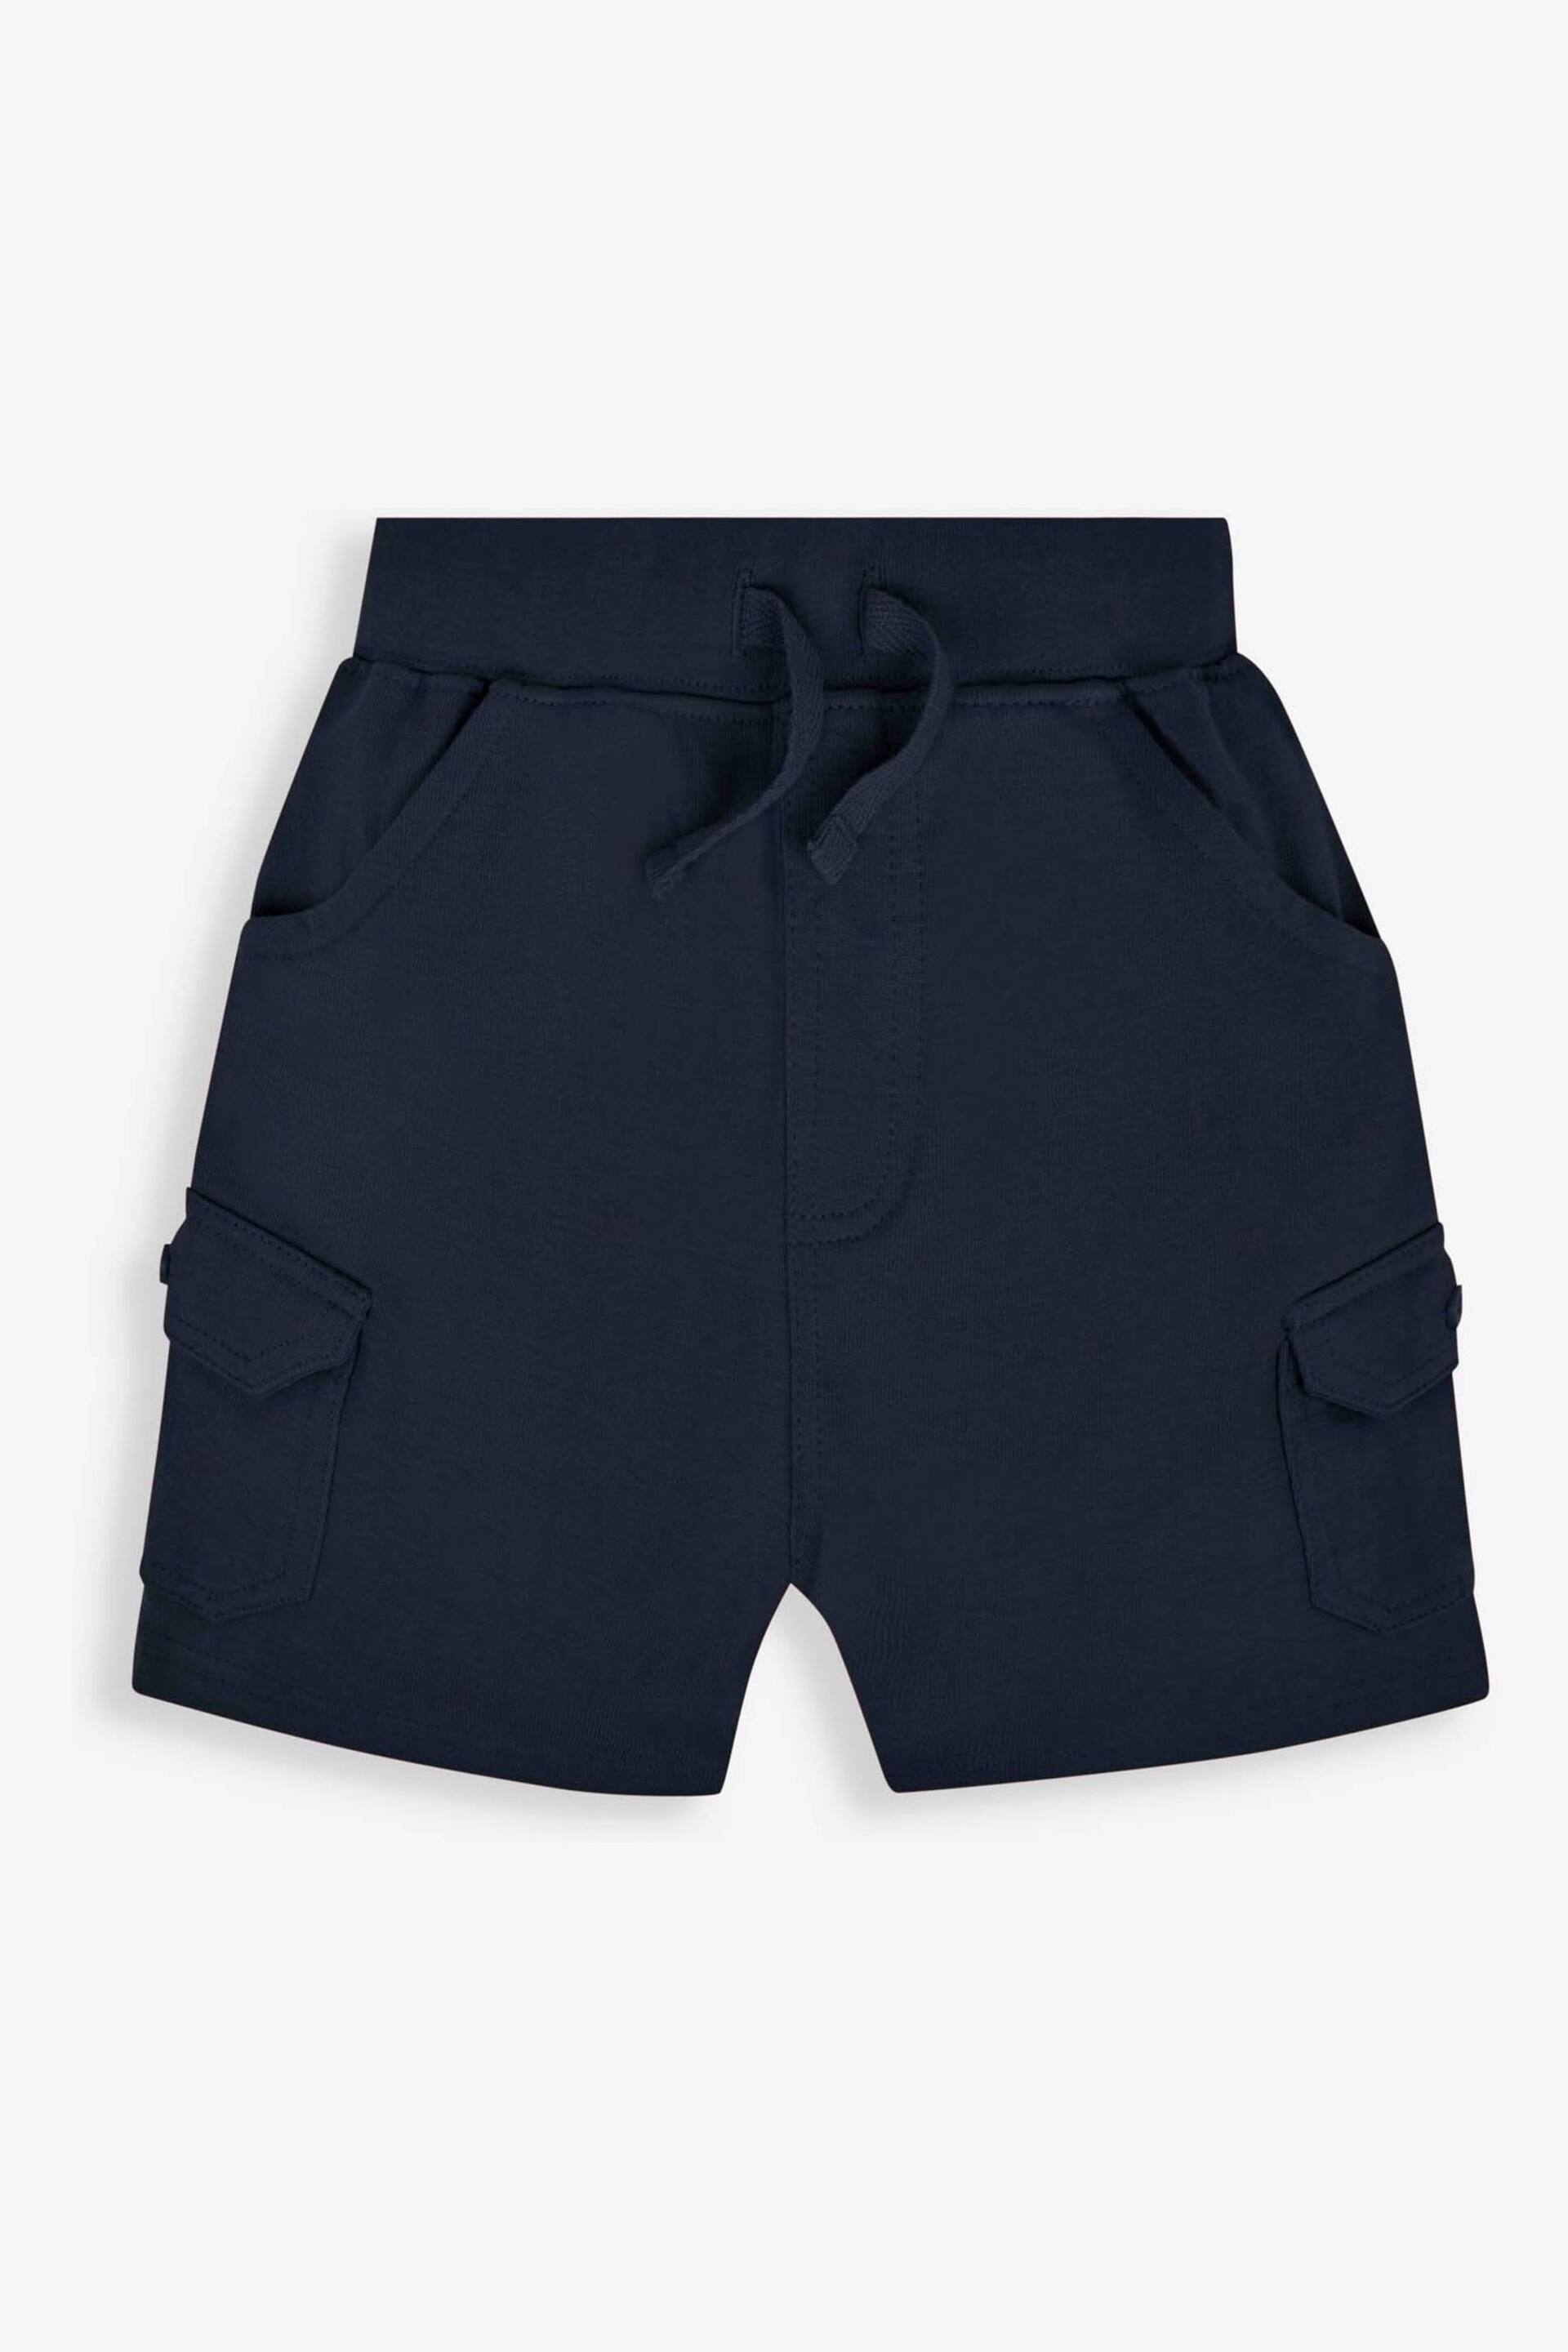 JoJo Maman Bébé Indigo Blue 2-Pack Jersey Cargo Shorts - Image 3 of 6